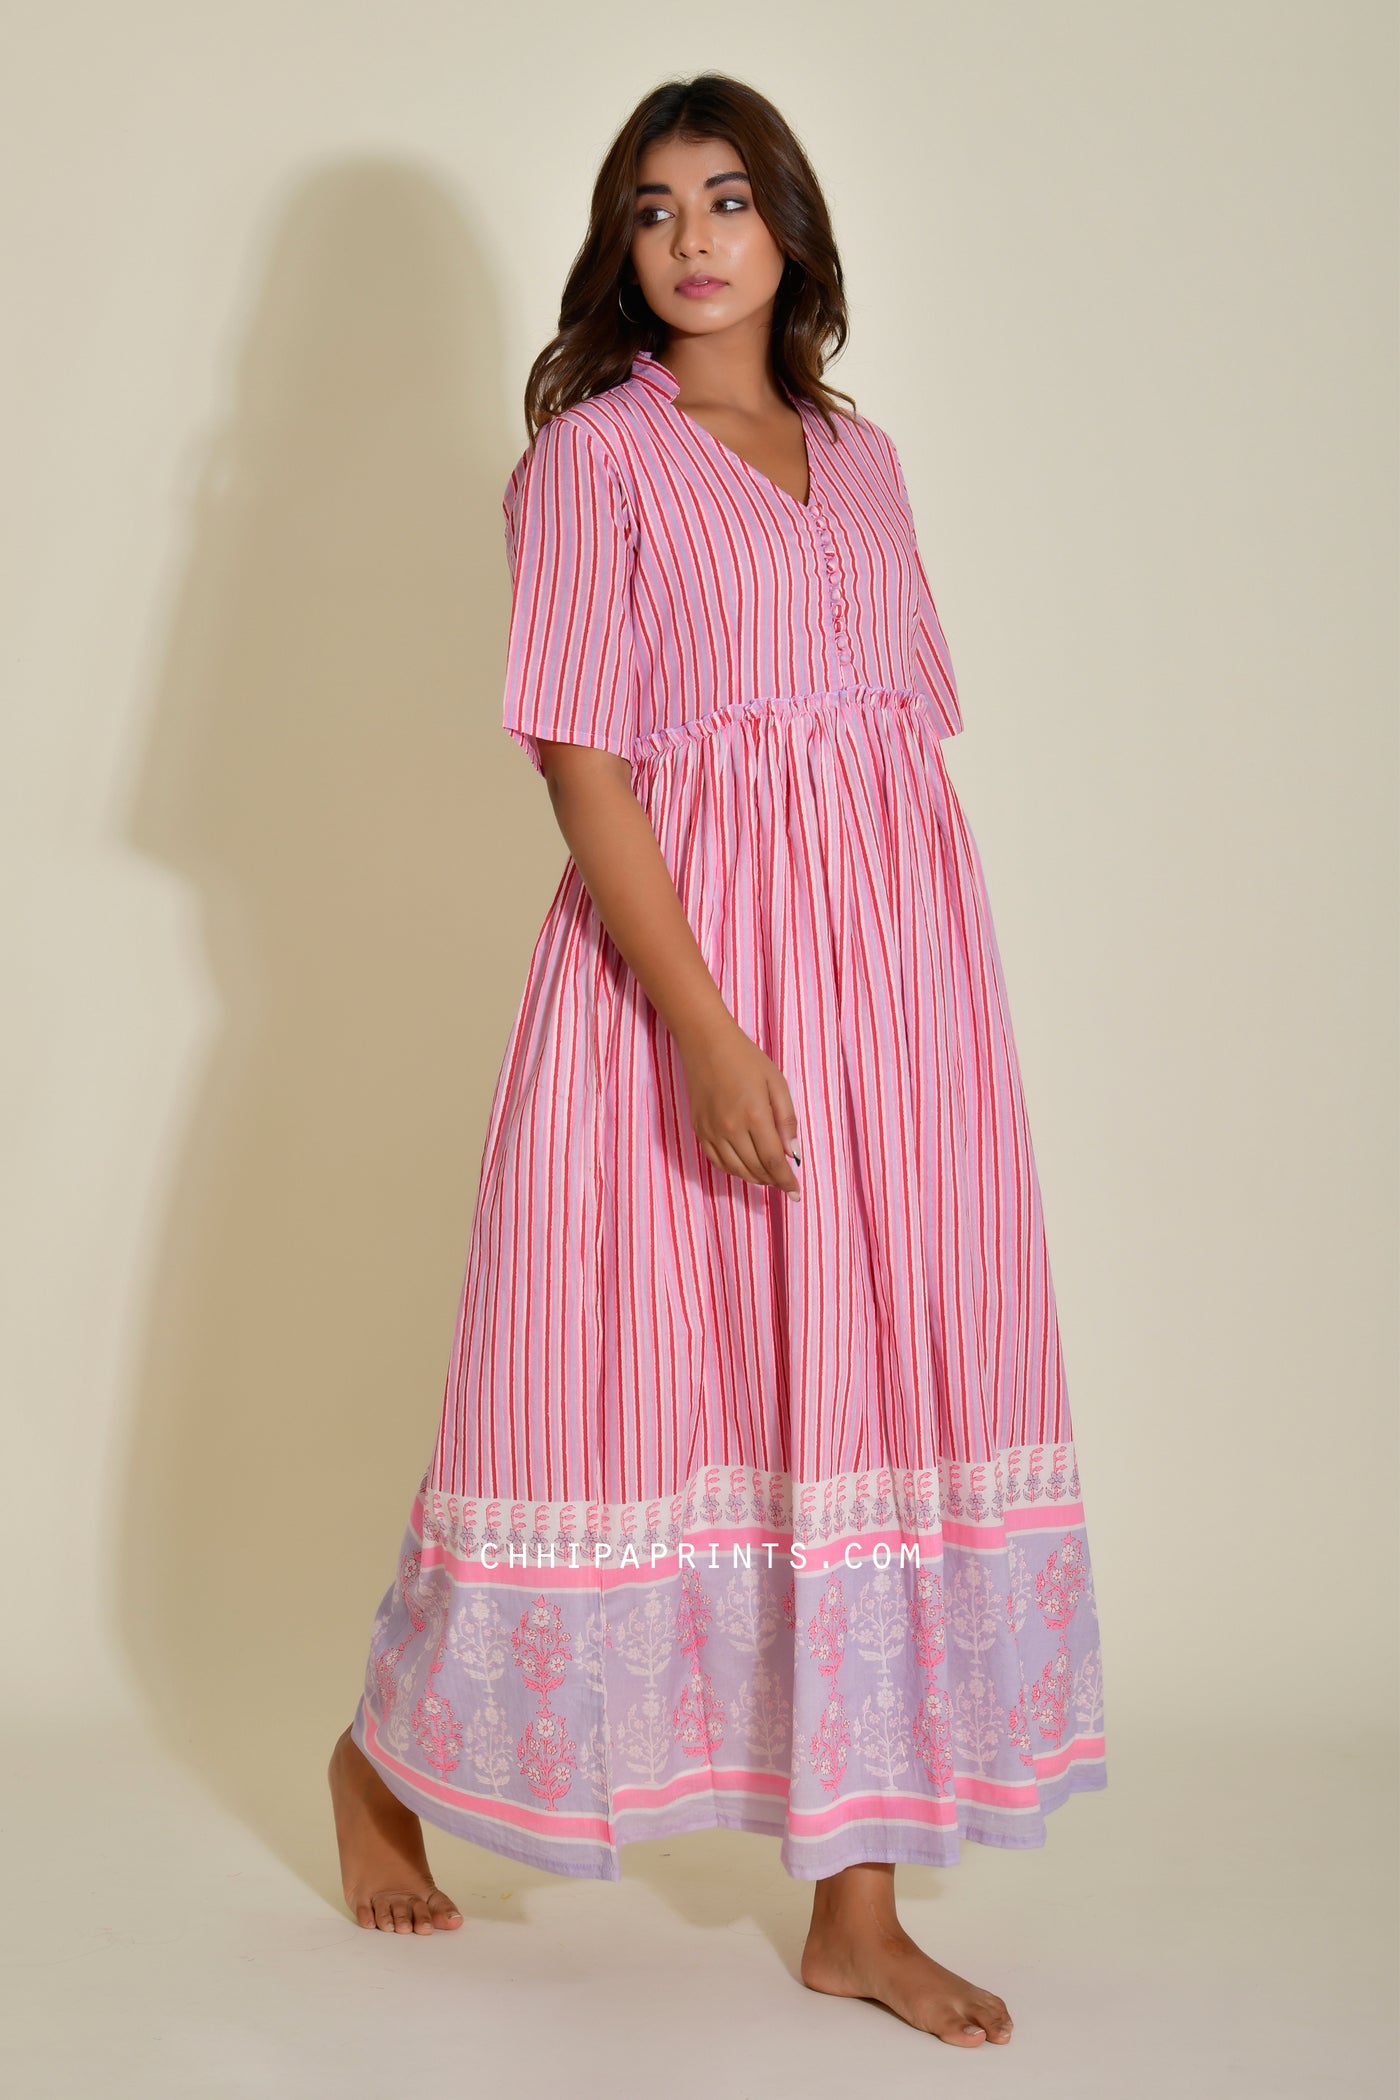 Cotton Stripe Print Panel Dress in Pink